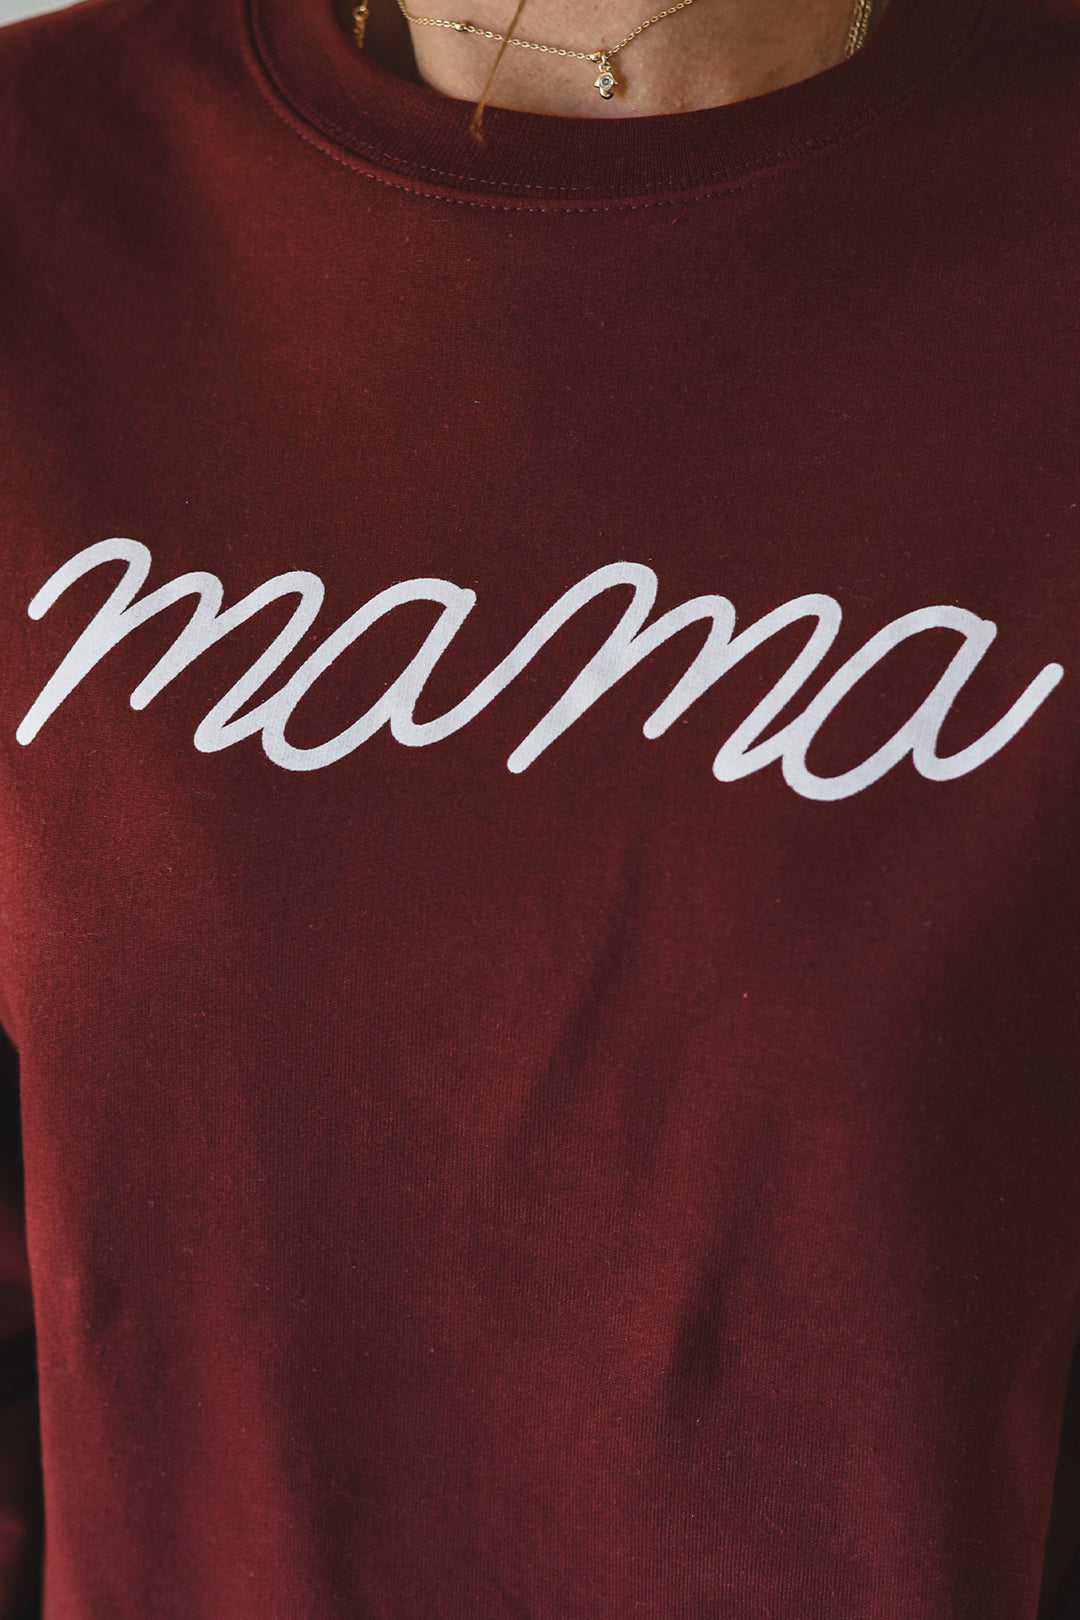 Mama Sweatshirt